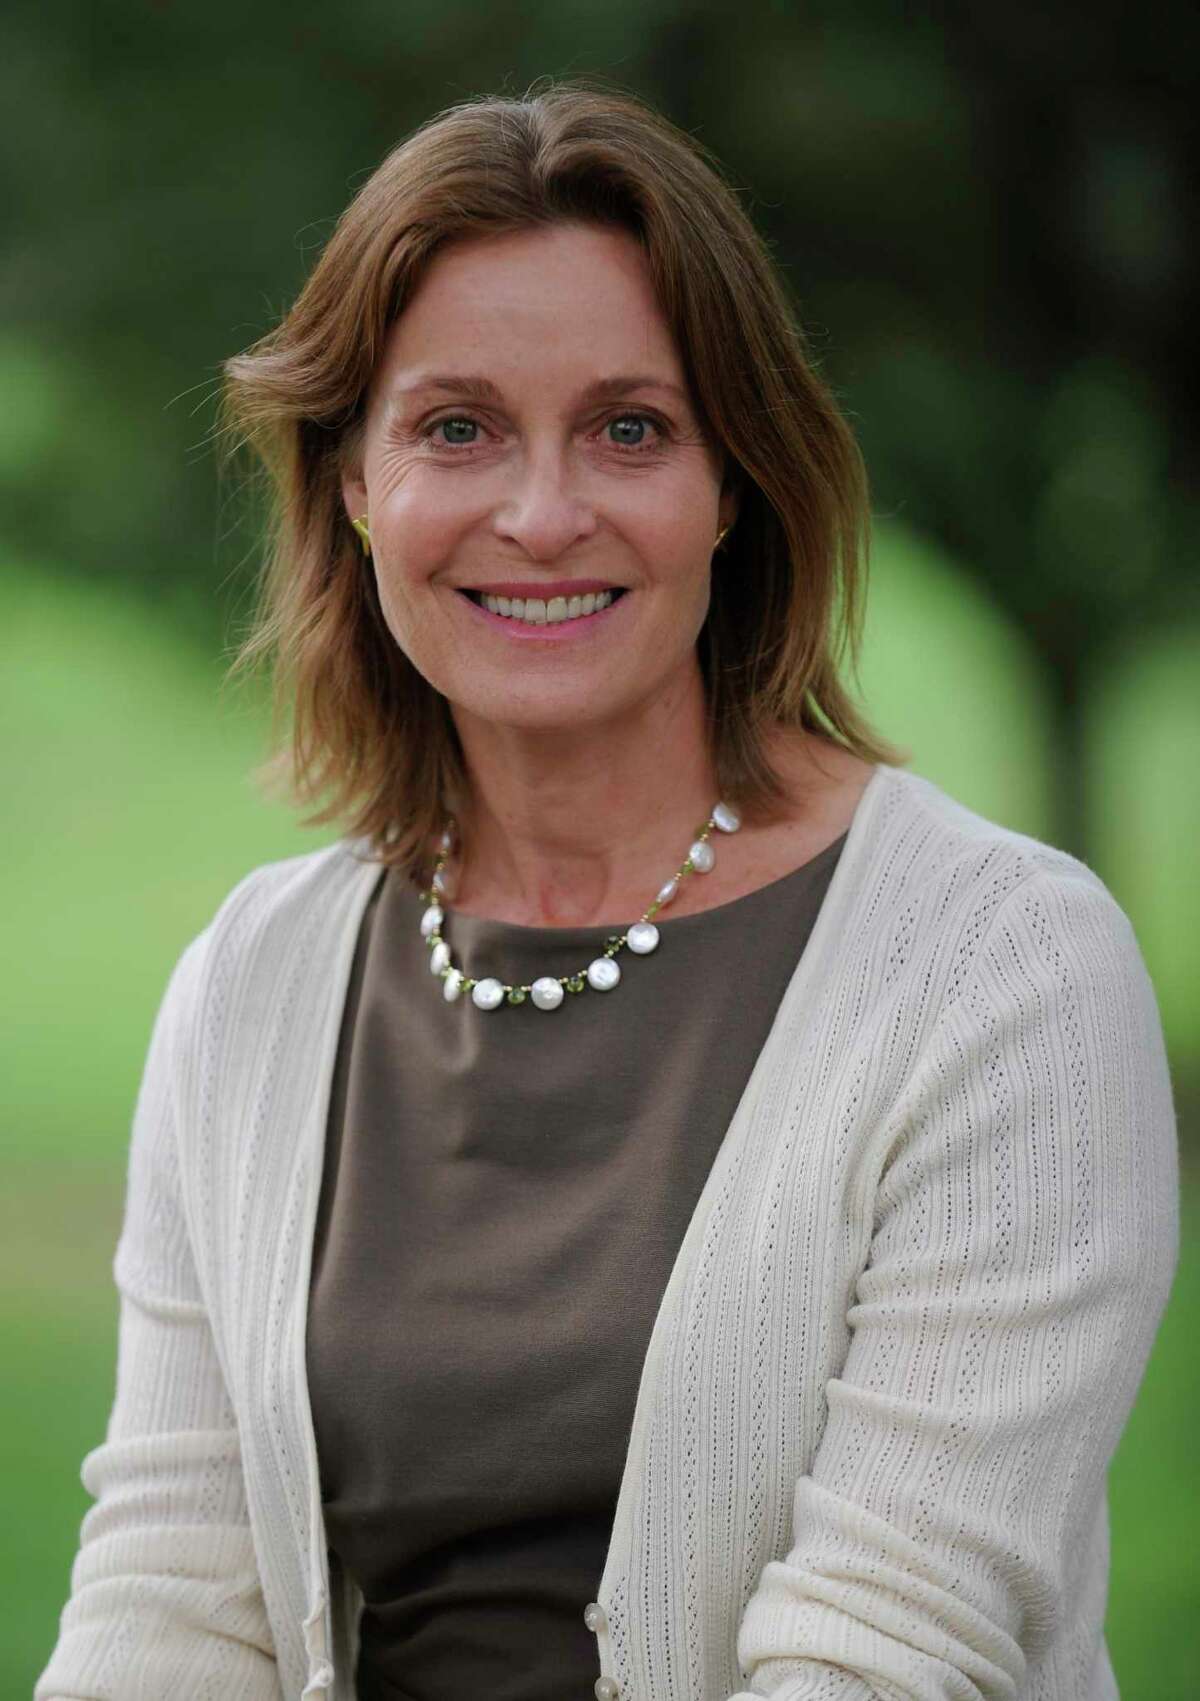 Jill Oberlander was recently elected to the Greenwich Board of Selectman.